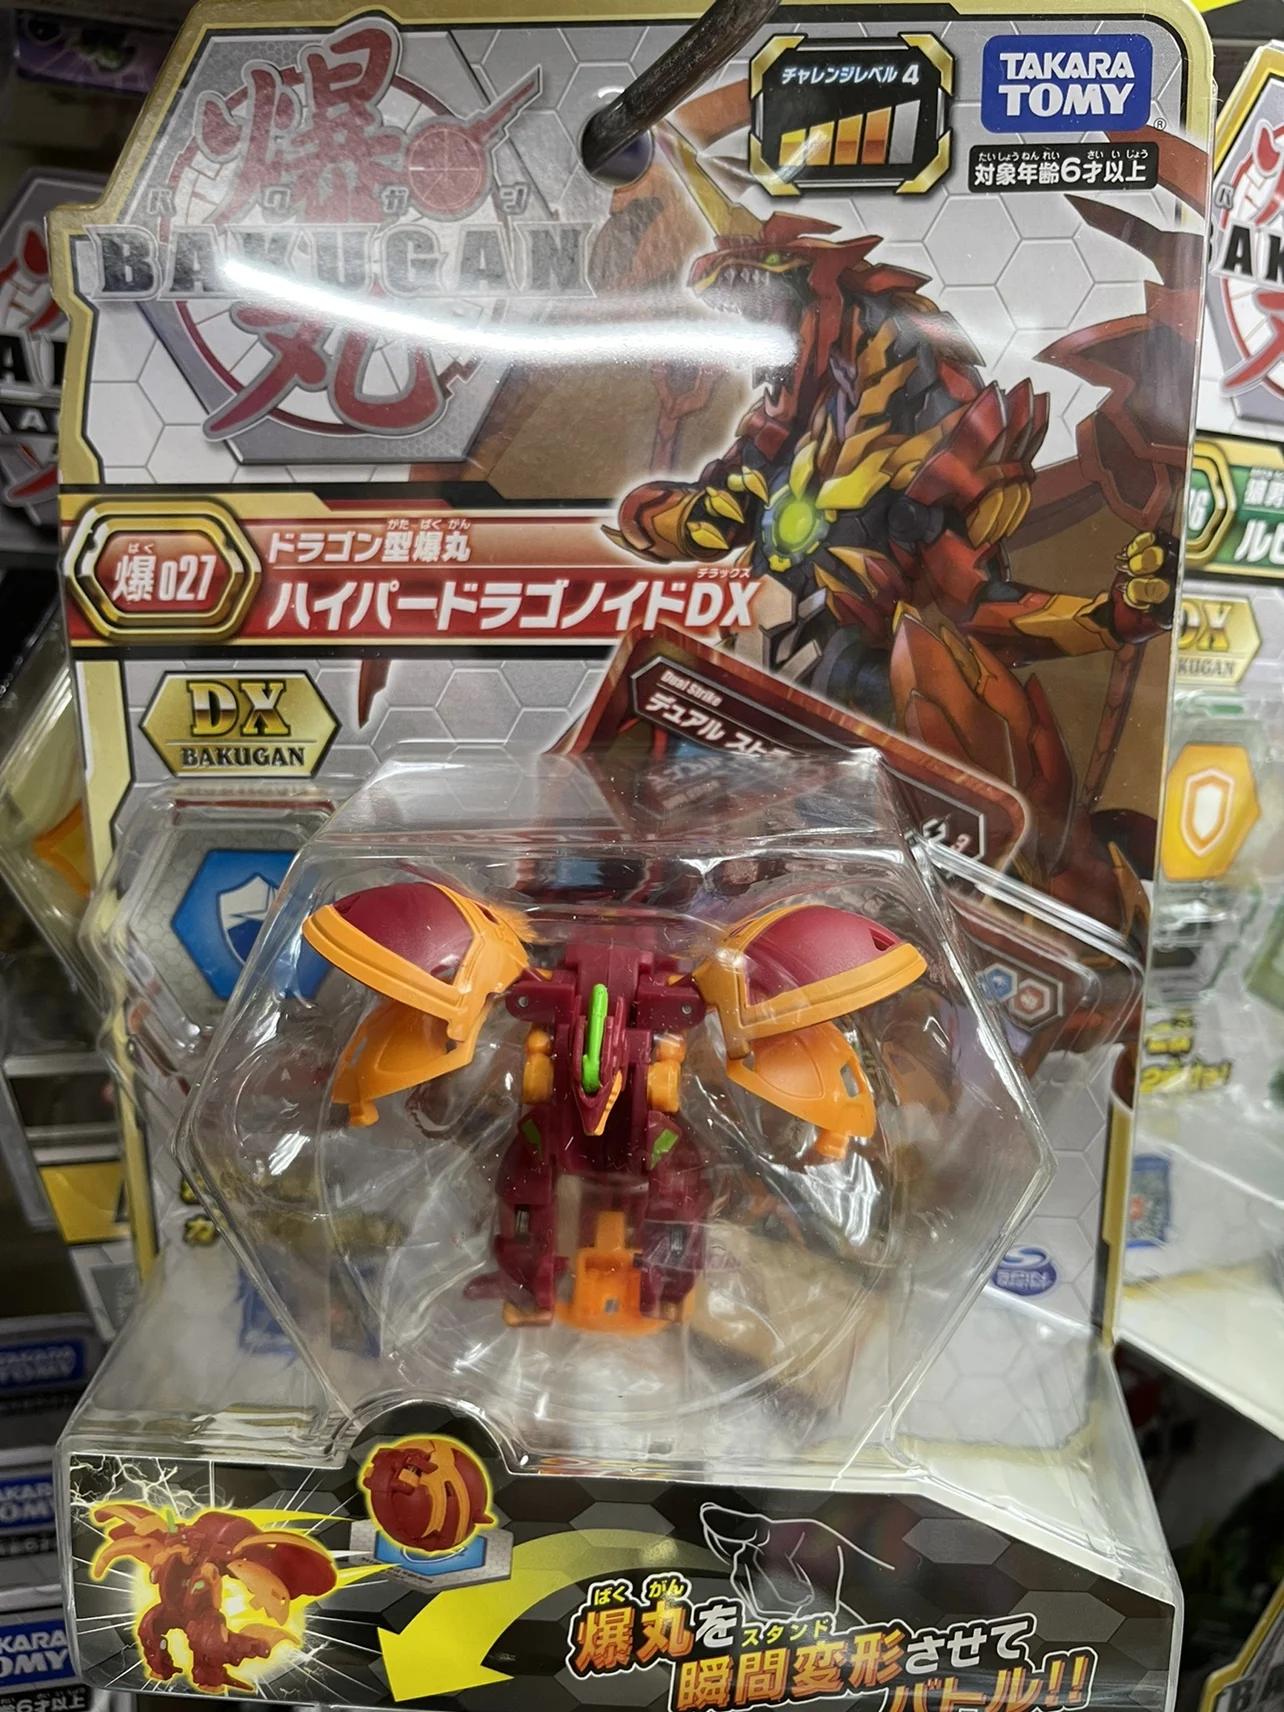 

Genuine TAKARA TOMY Bakugan Battle Brawlers Warrior Bakguan Blast 027 DX Dan Kuso Toy Birthday Gift